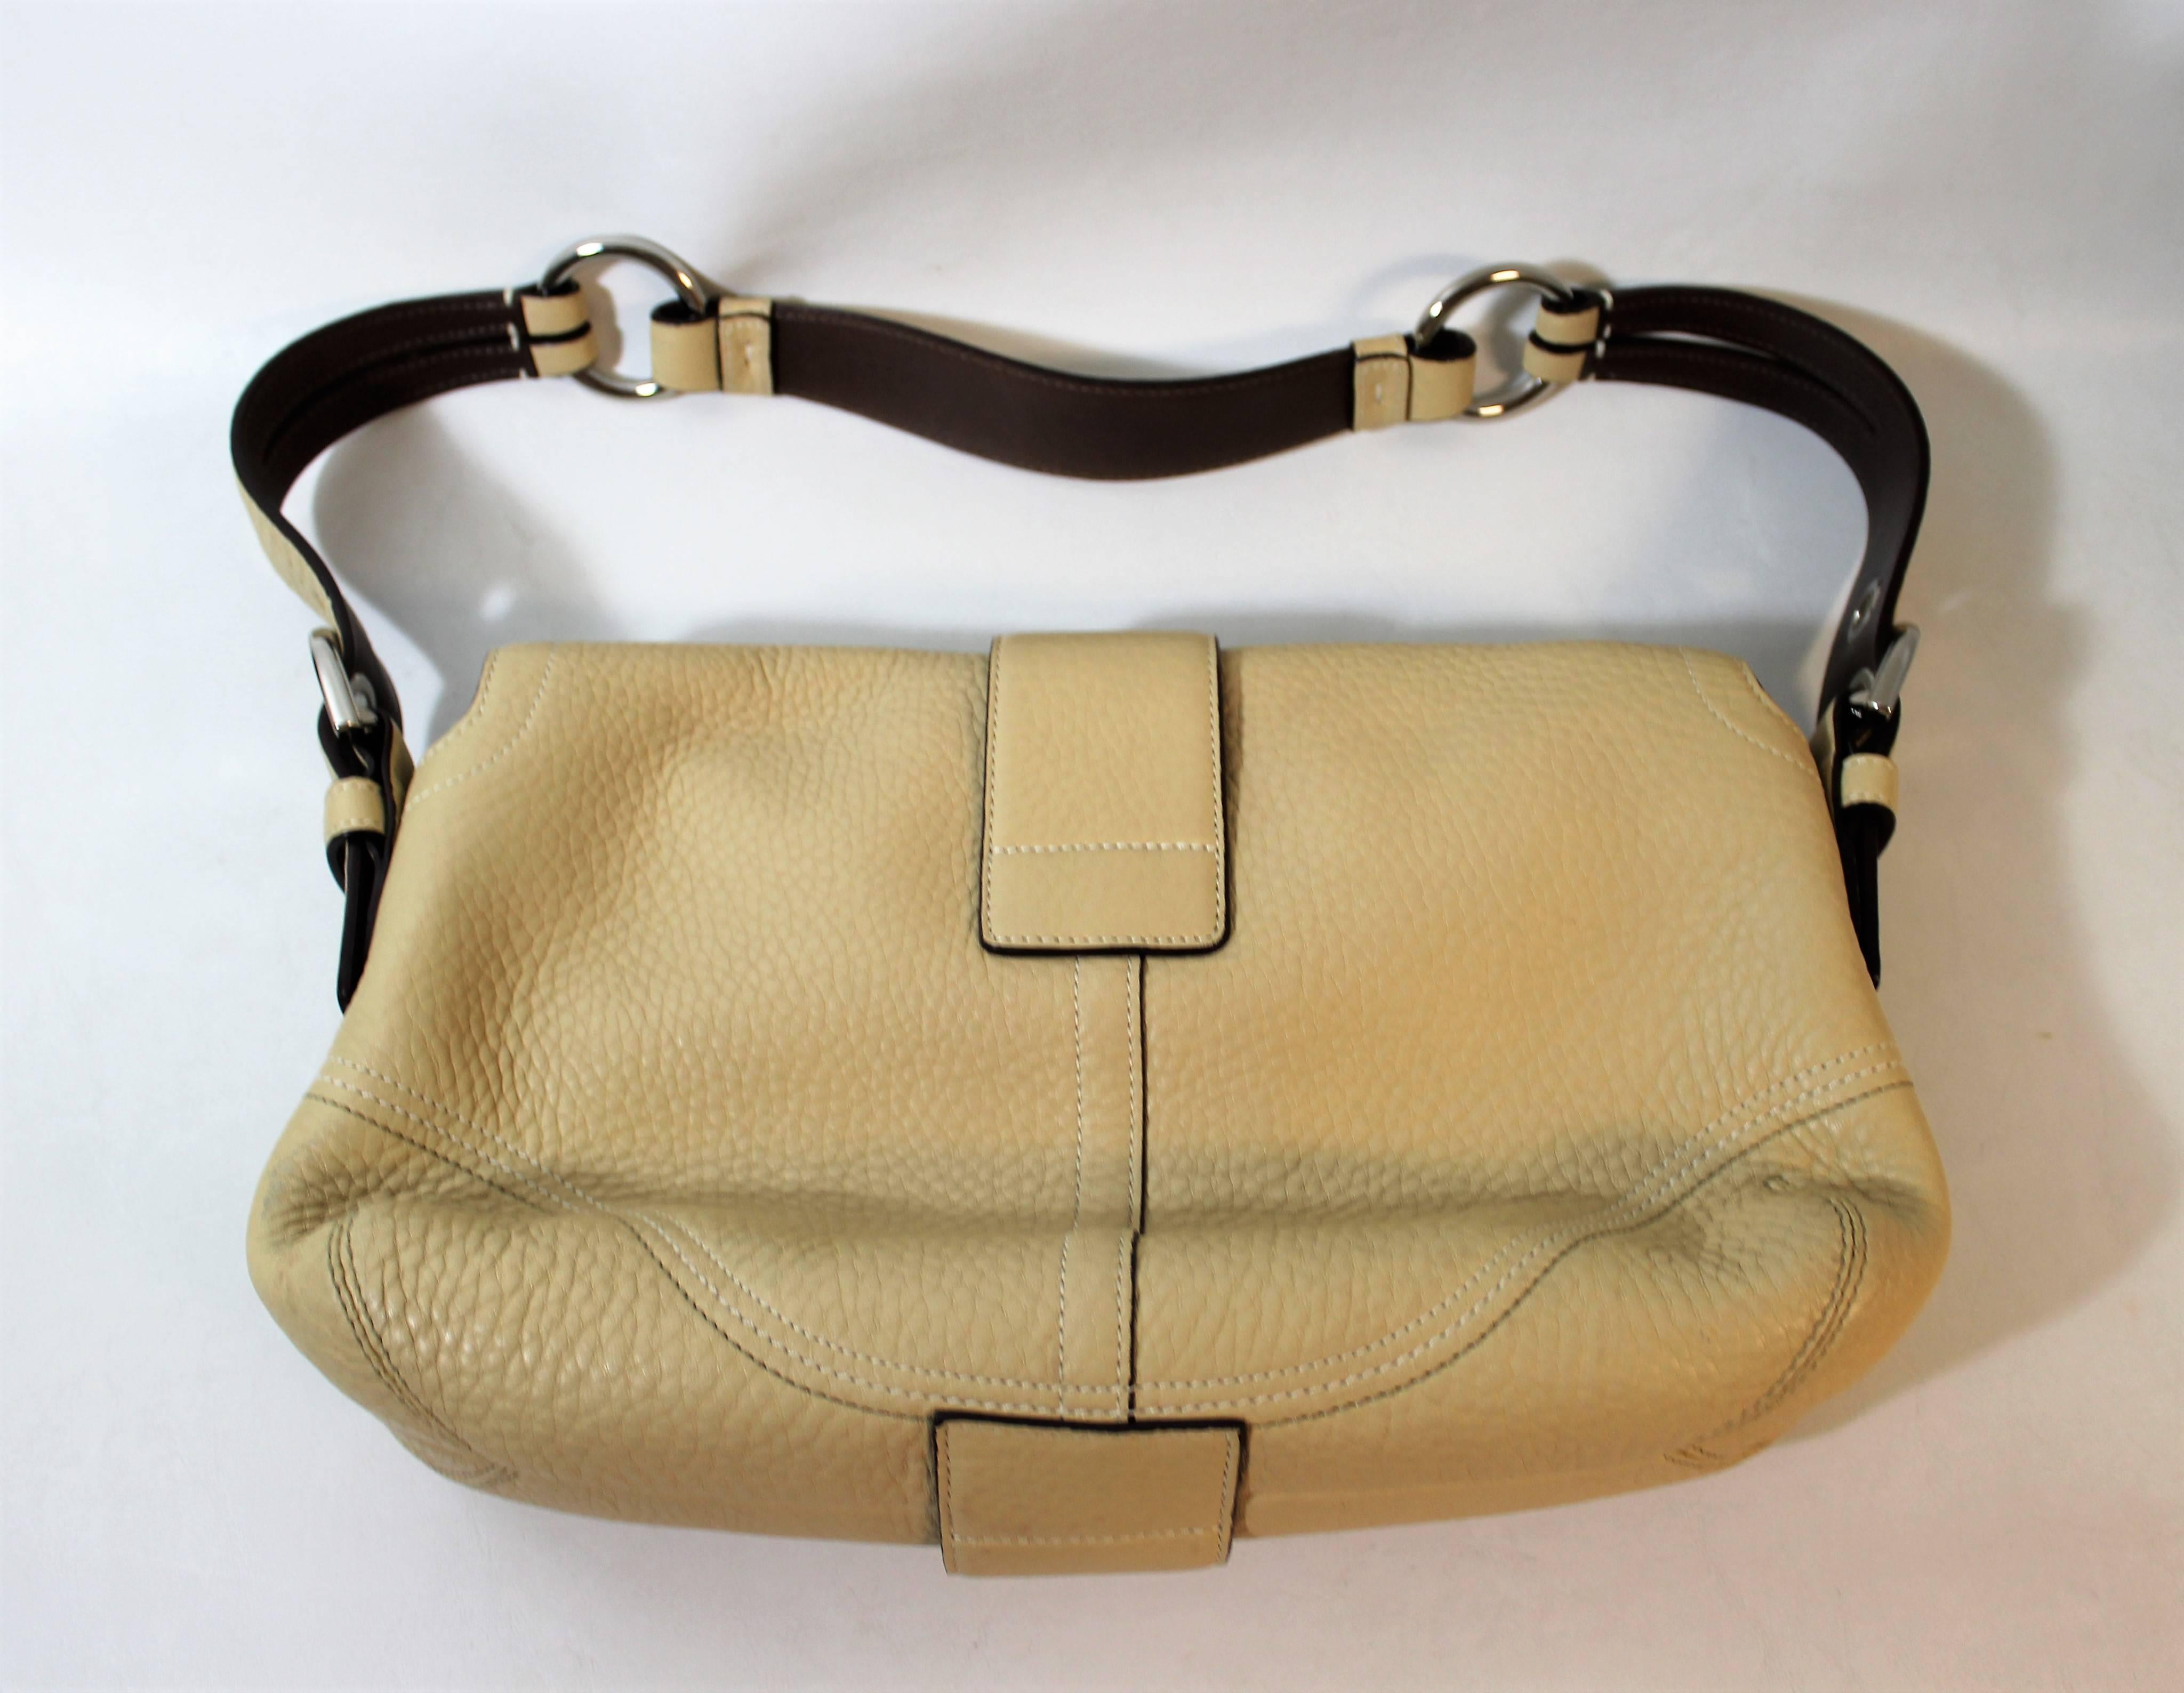 Leather Coach handbag or purse.